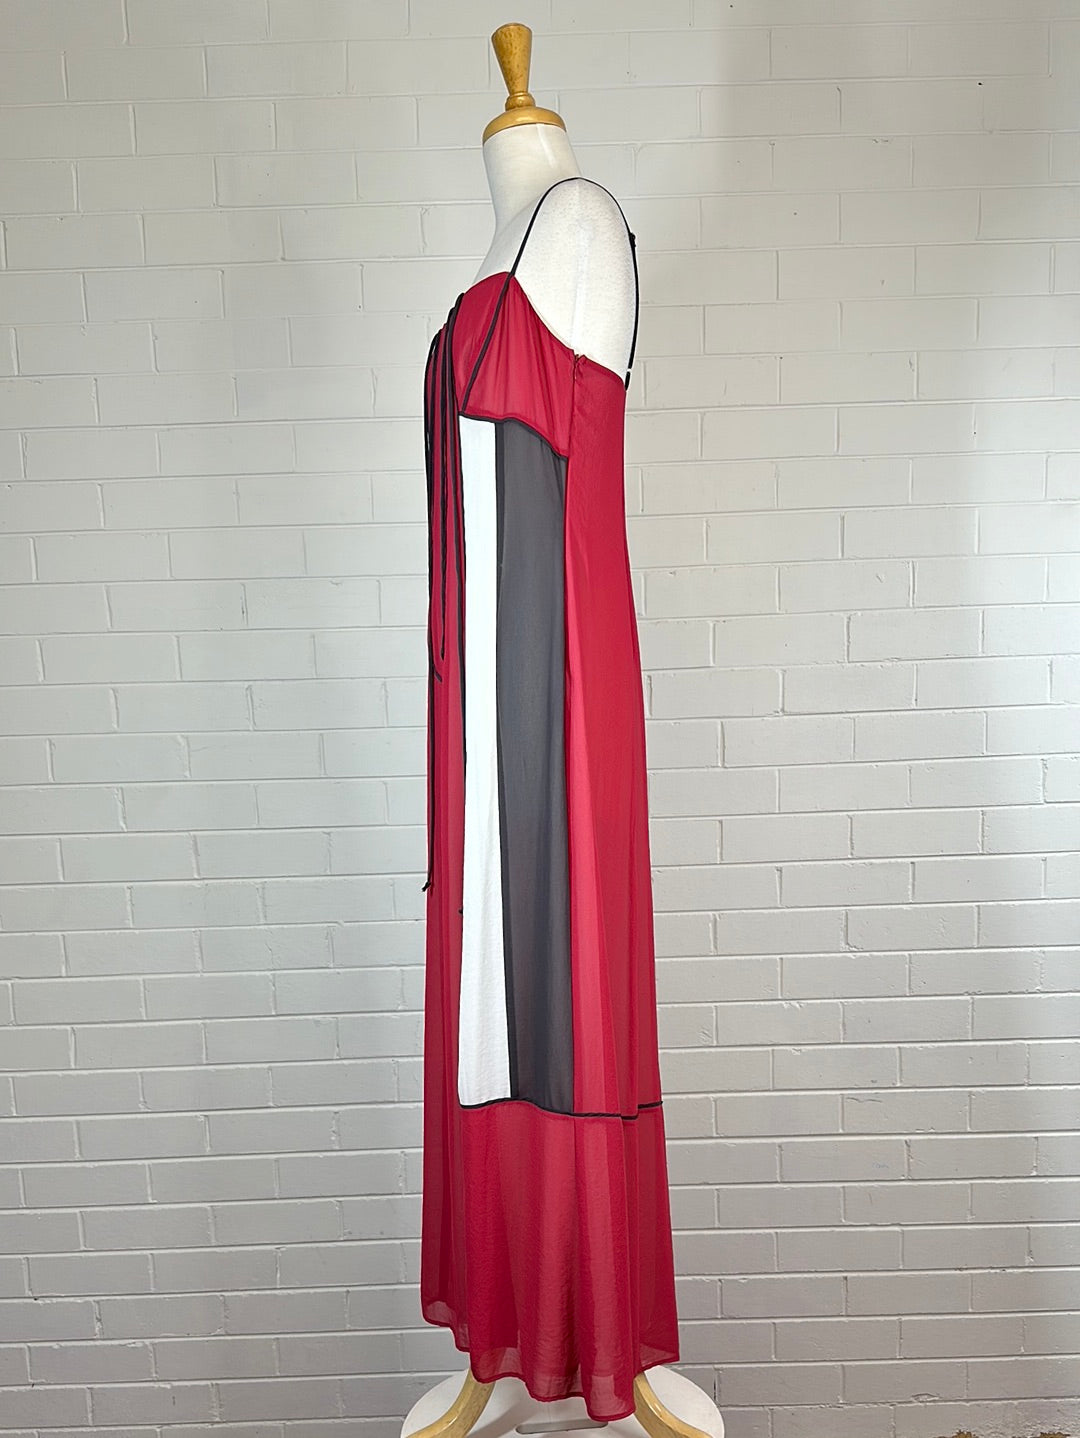 Vallen | dress | vintage 90's | size 12 | maxi length | made in Australia